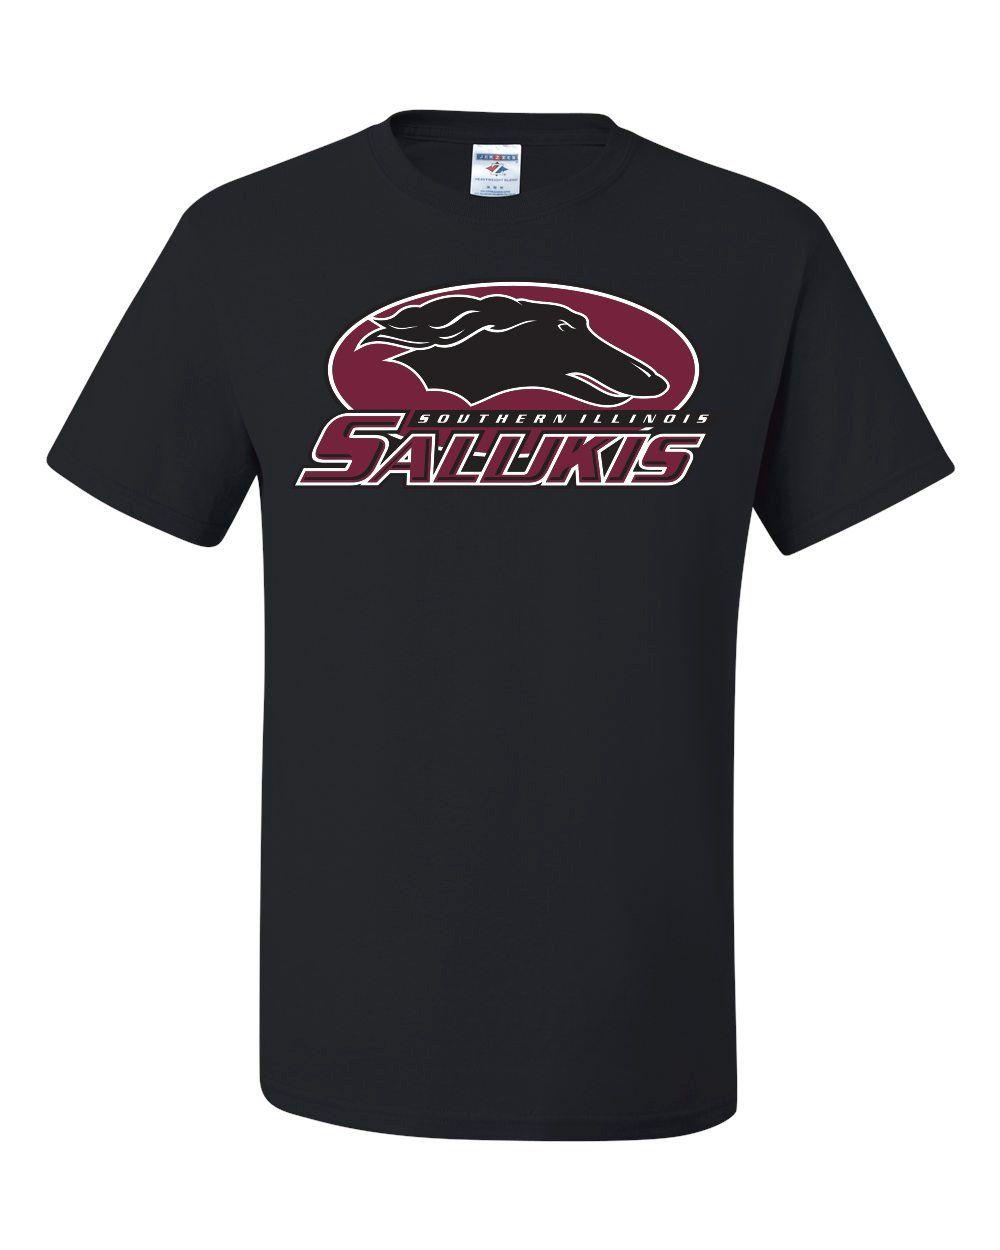 Southern Illinois Salukis Logo - Southern Illinois Salukis Athletic Logo Black T Shirt